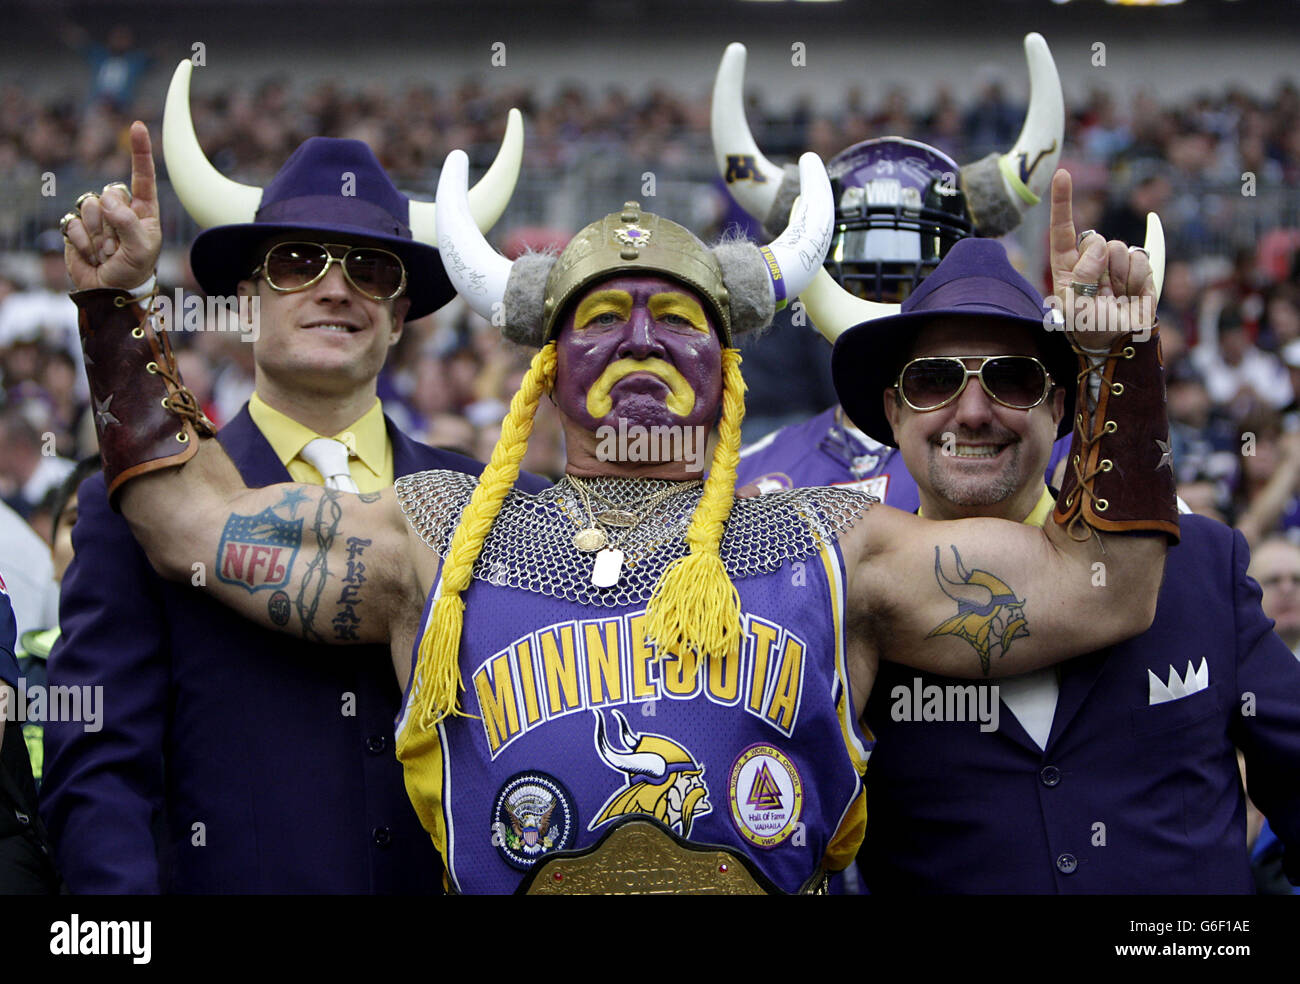 Minnesota Vikings Fans